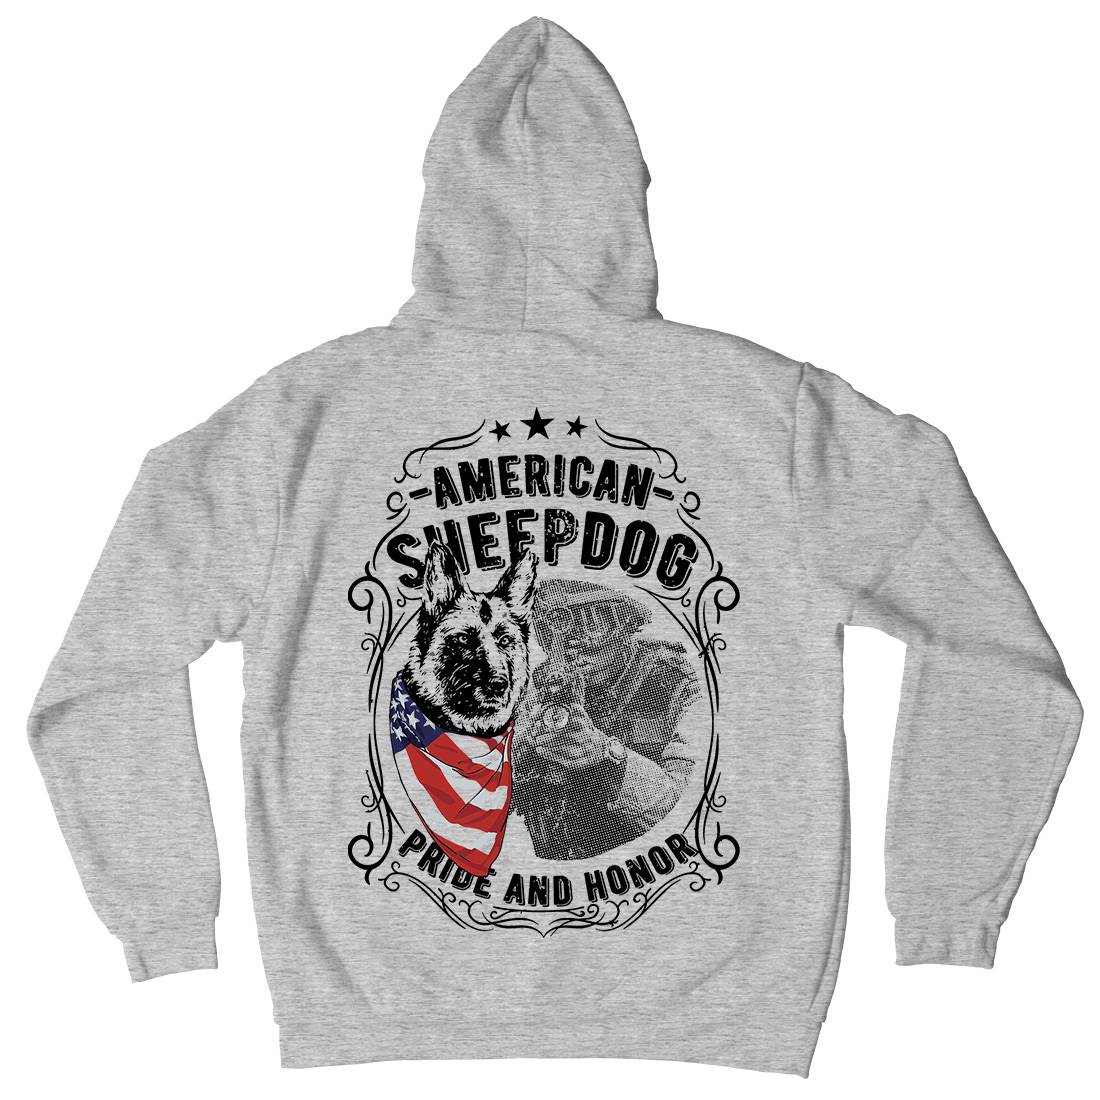 Sheepdog Mens Hoodie With Pocket American C904